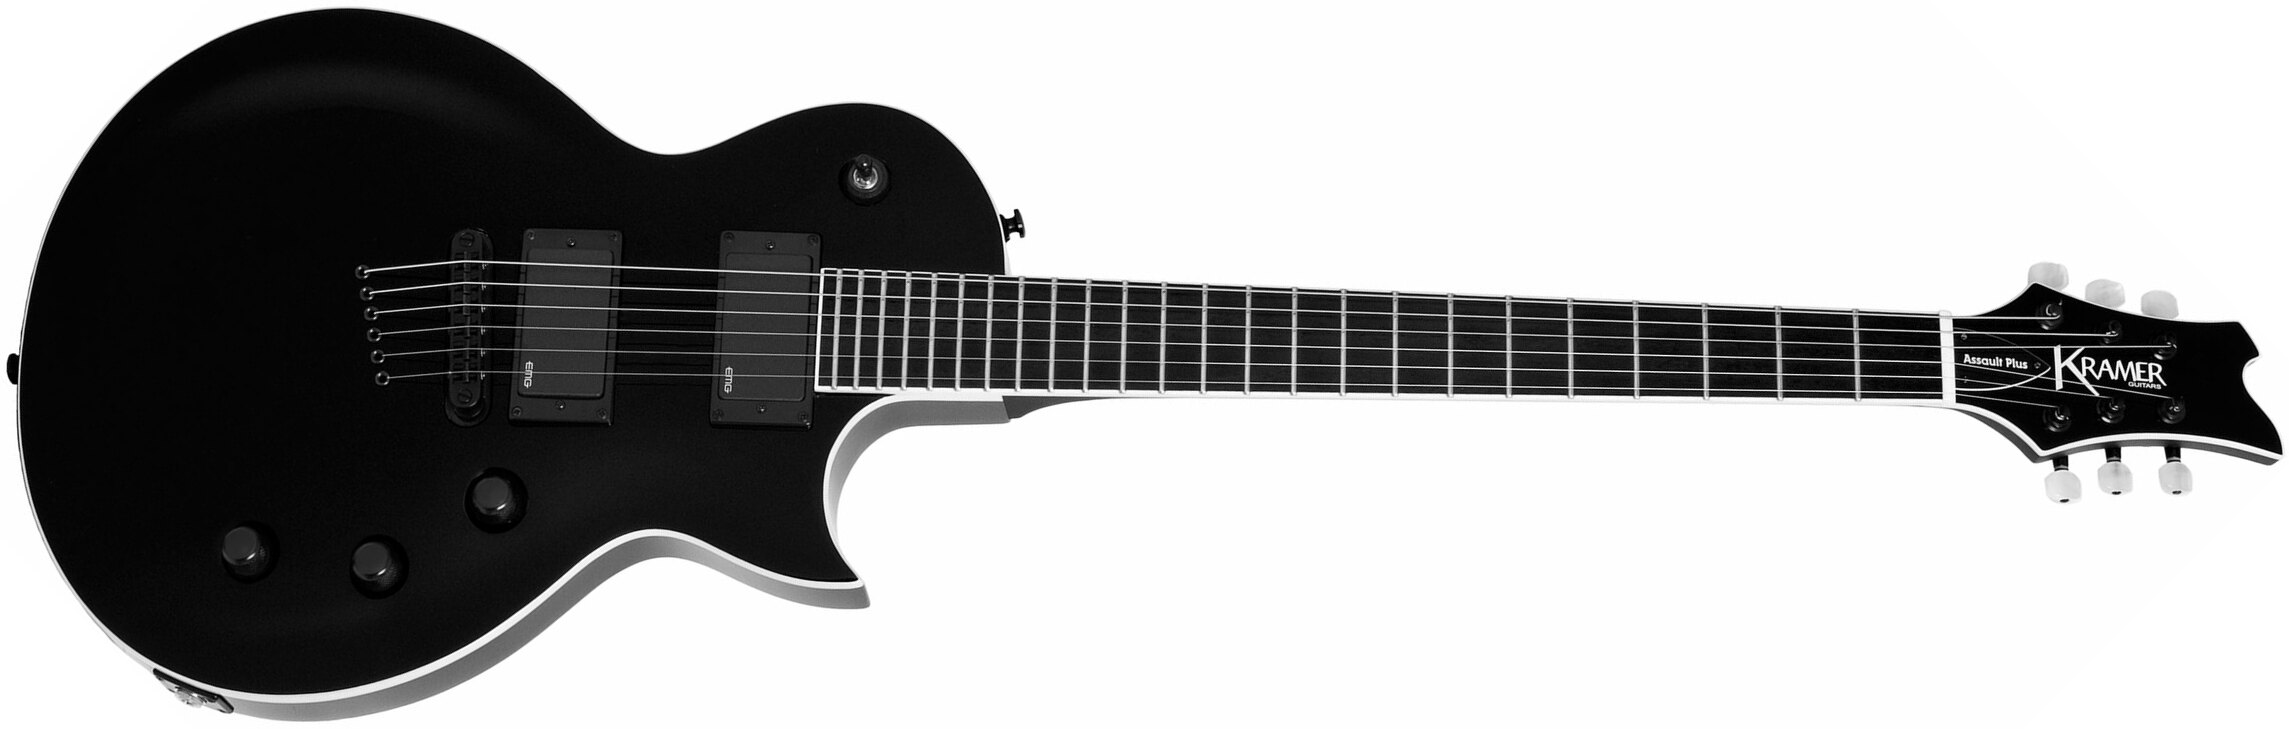 Kramer Assault Plus 2h Emg Ht Eb - Black - Single cut electric guitar - Main picture